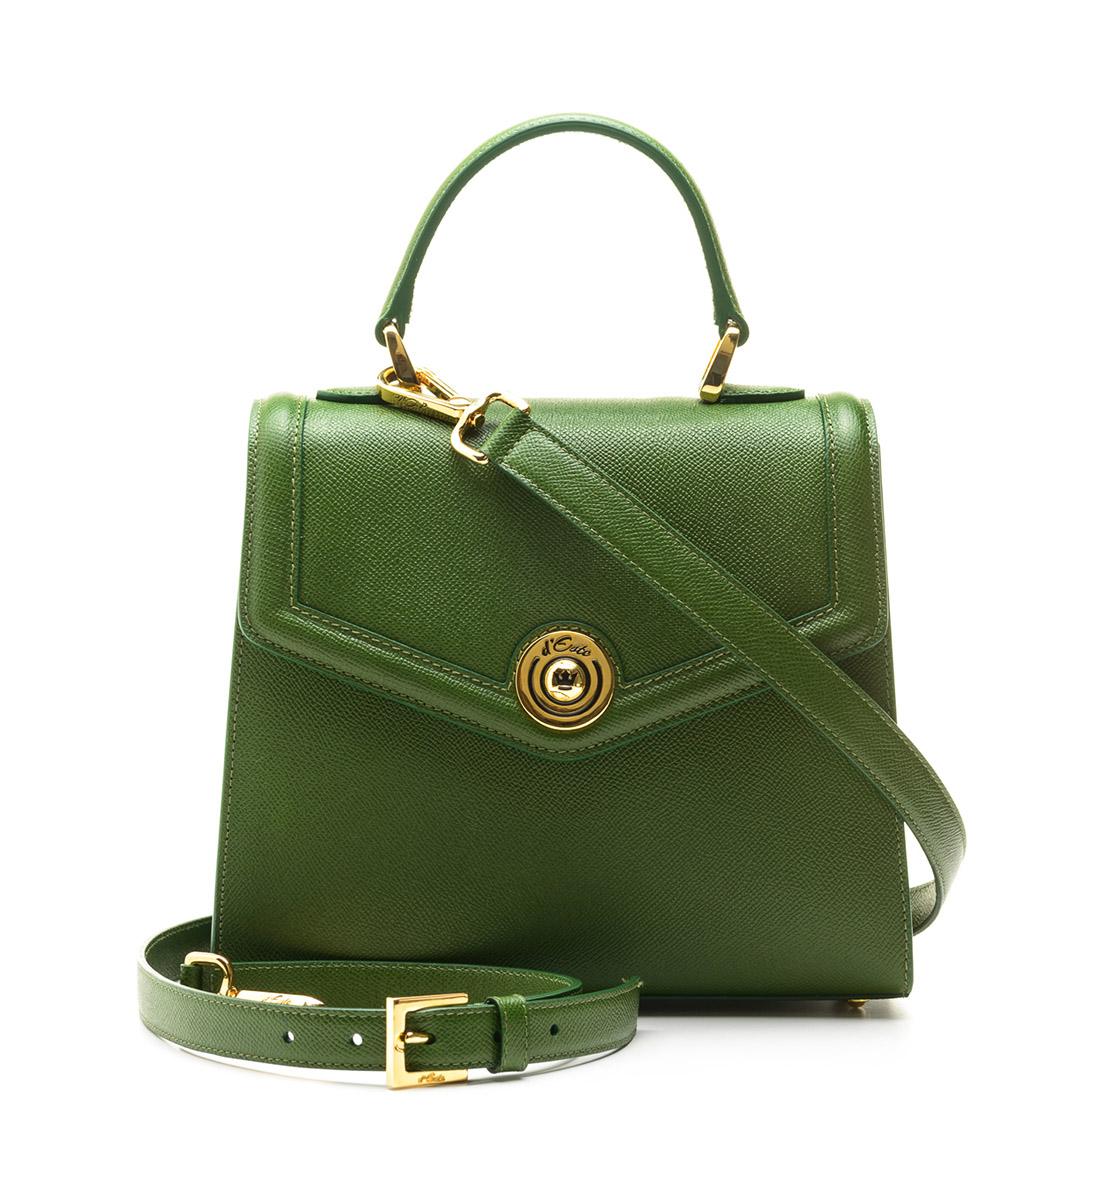 D'Este Monaco Green bag borse e-commerce still-life